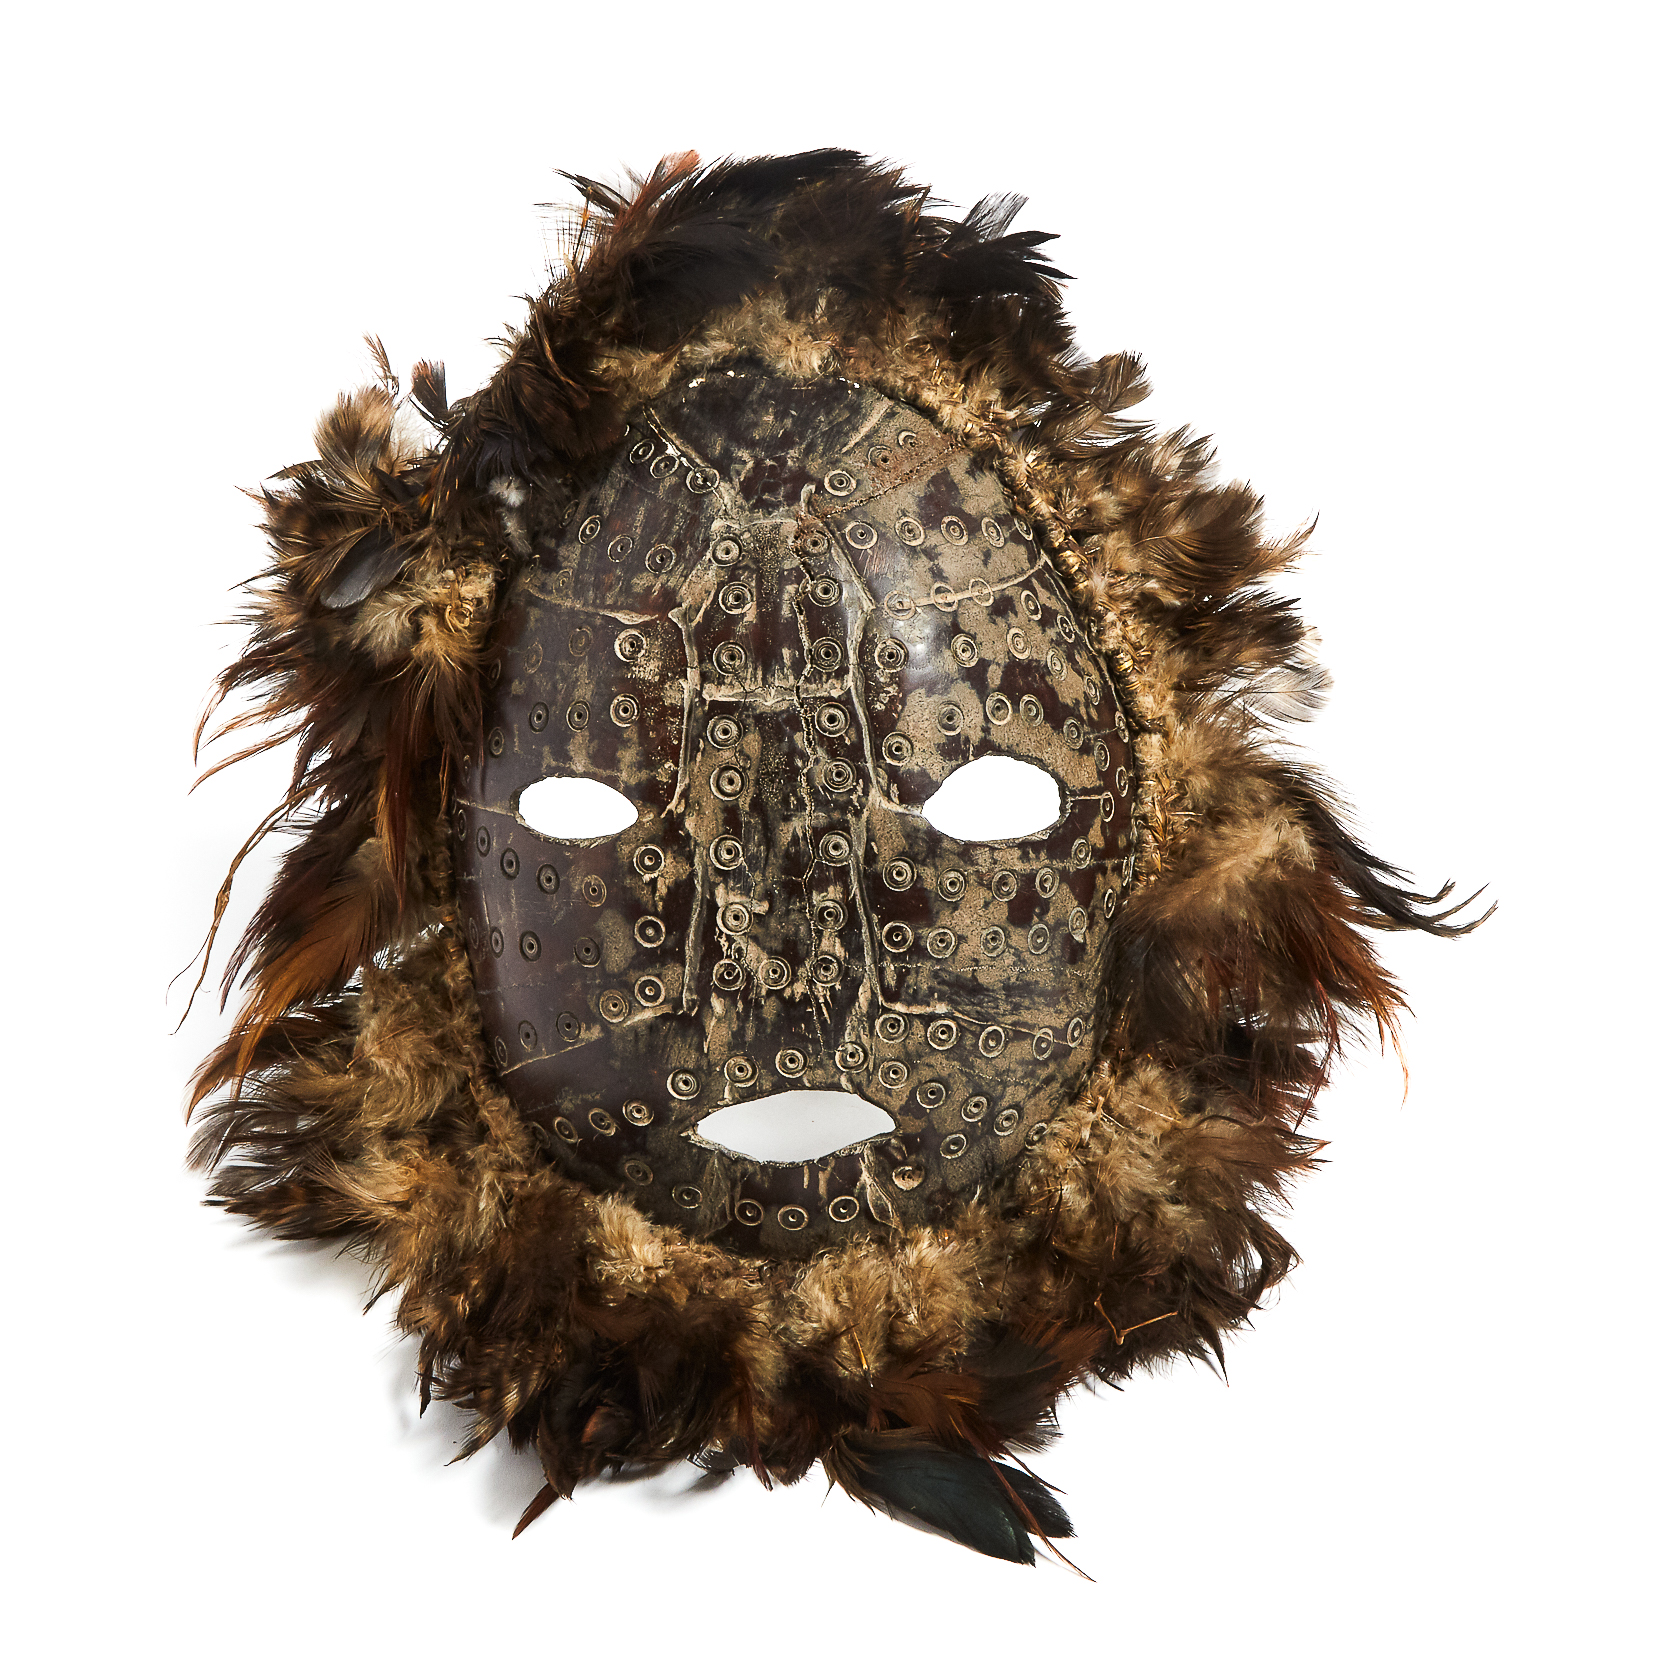 Lega Turtle Shell Mask, Democratic Republic of Congo, Central Africa